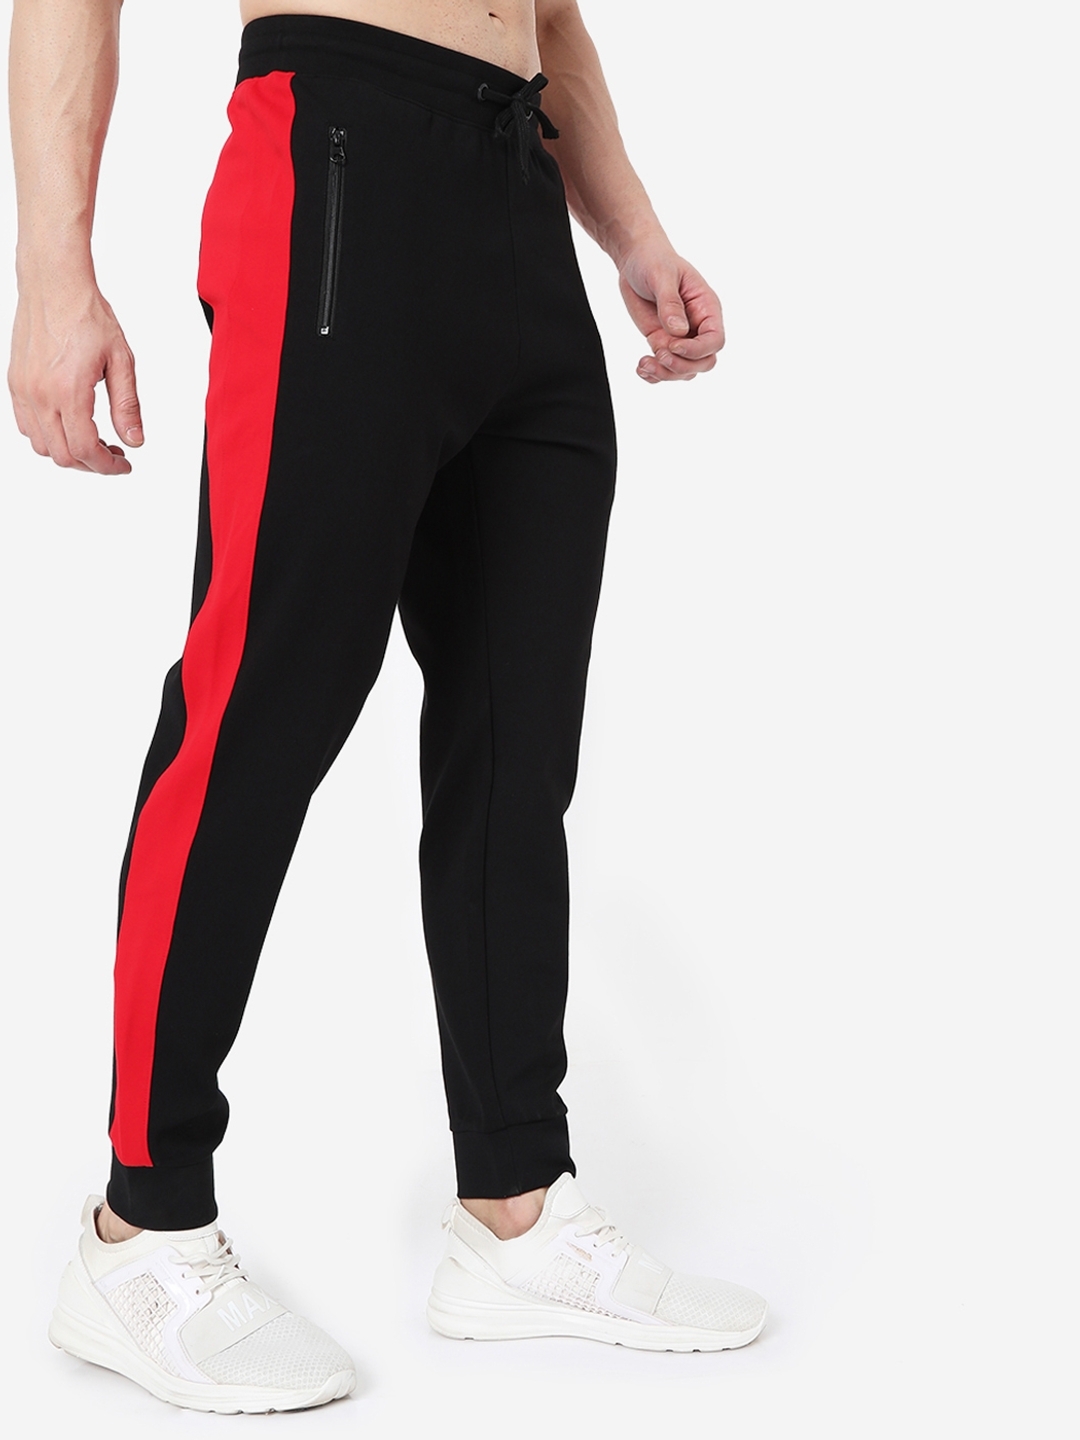 Mens Casual Athletic Cargo Pants - Fashion Slim Fit Palestine | Ubuy